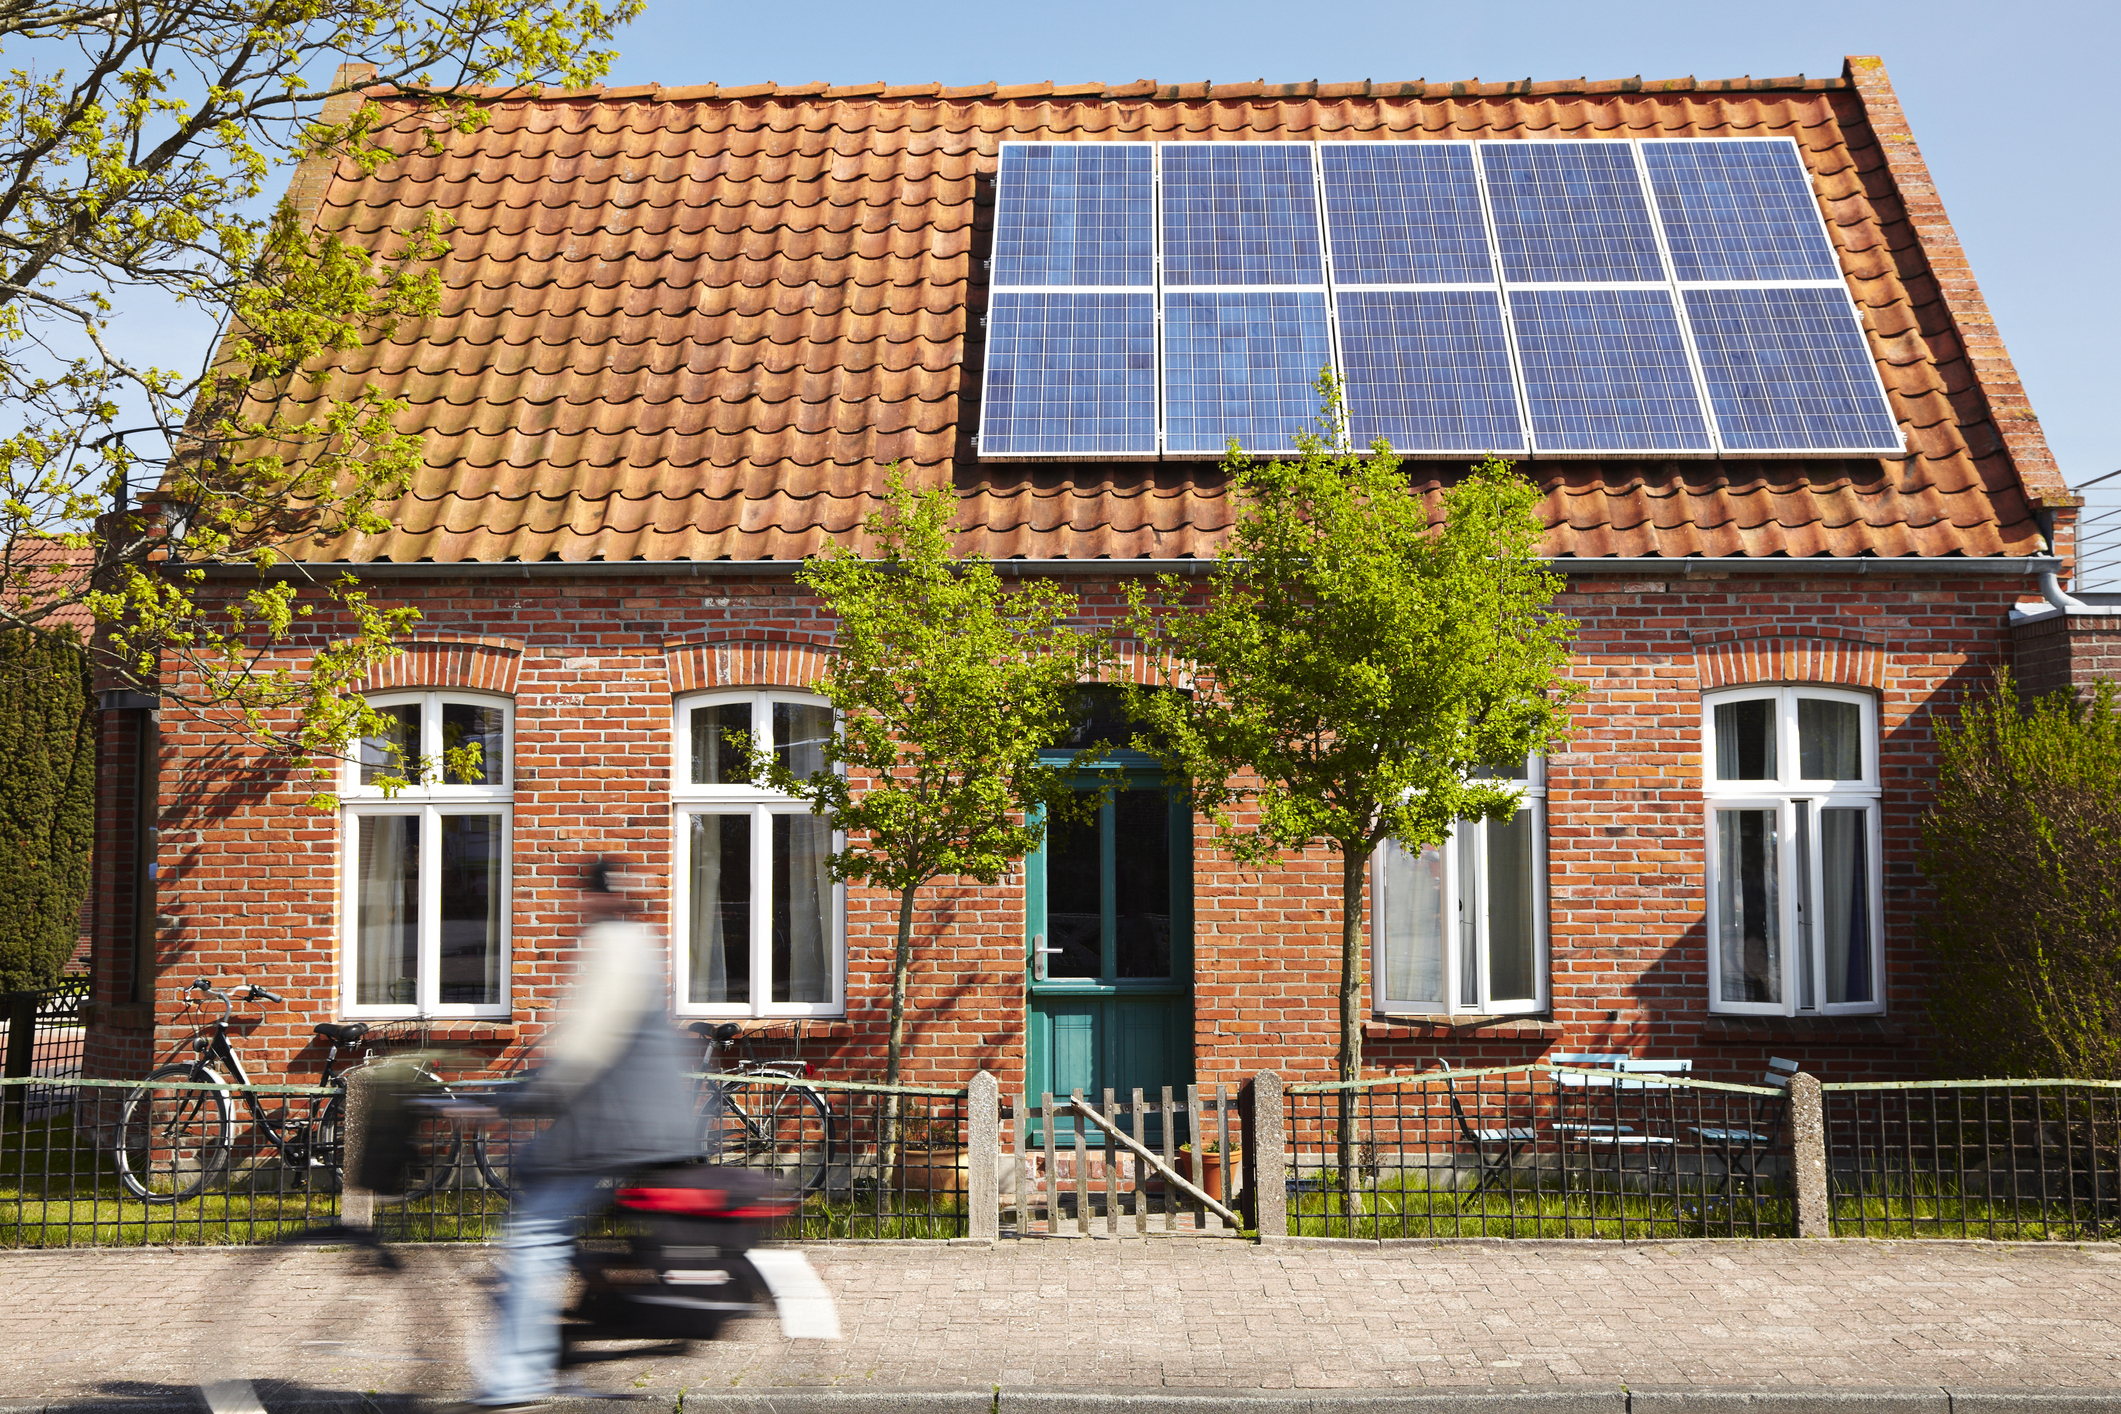 Empowering Homes: The Era of Solar Power Innovation